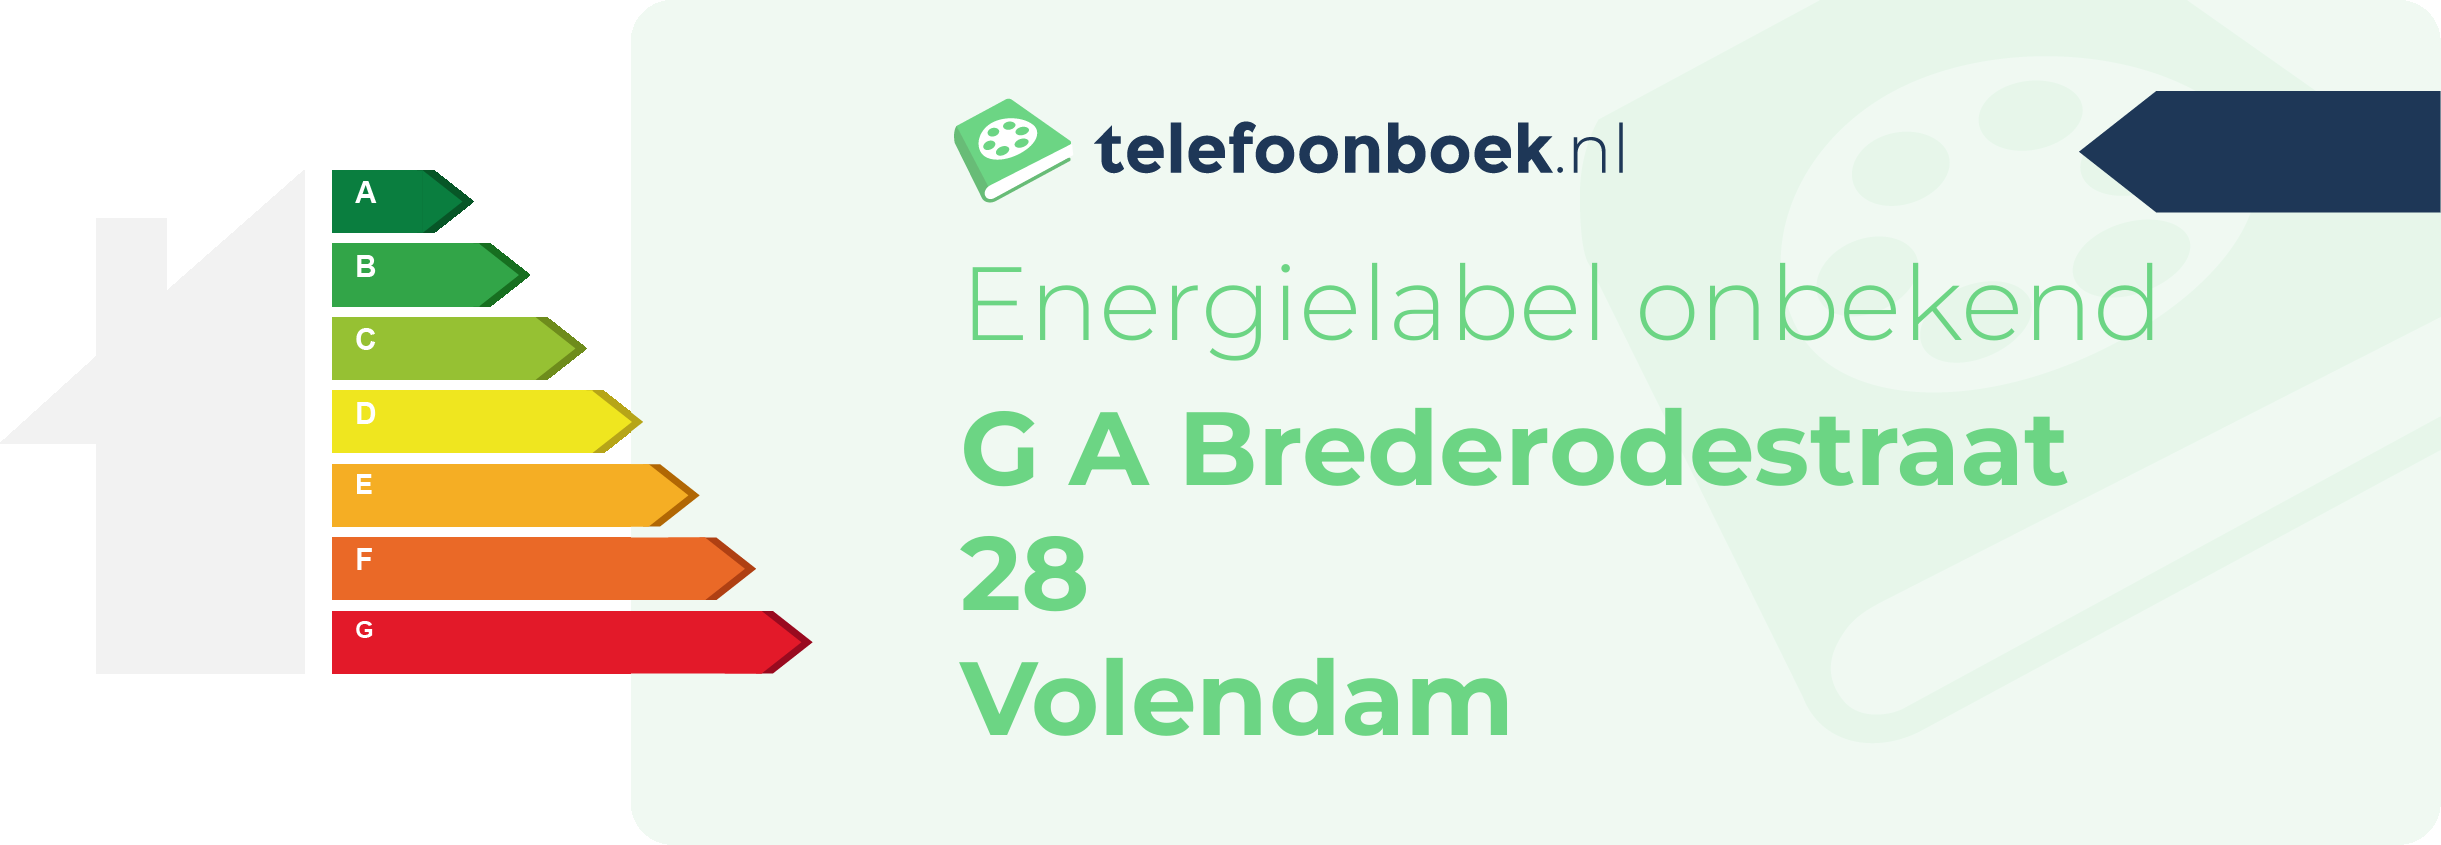 Energielabel G A Brederodestraat 28 Volendam